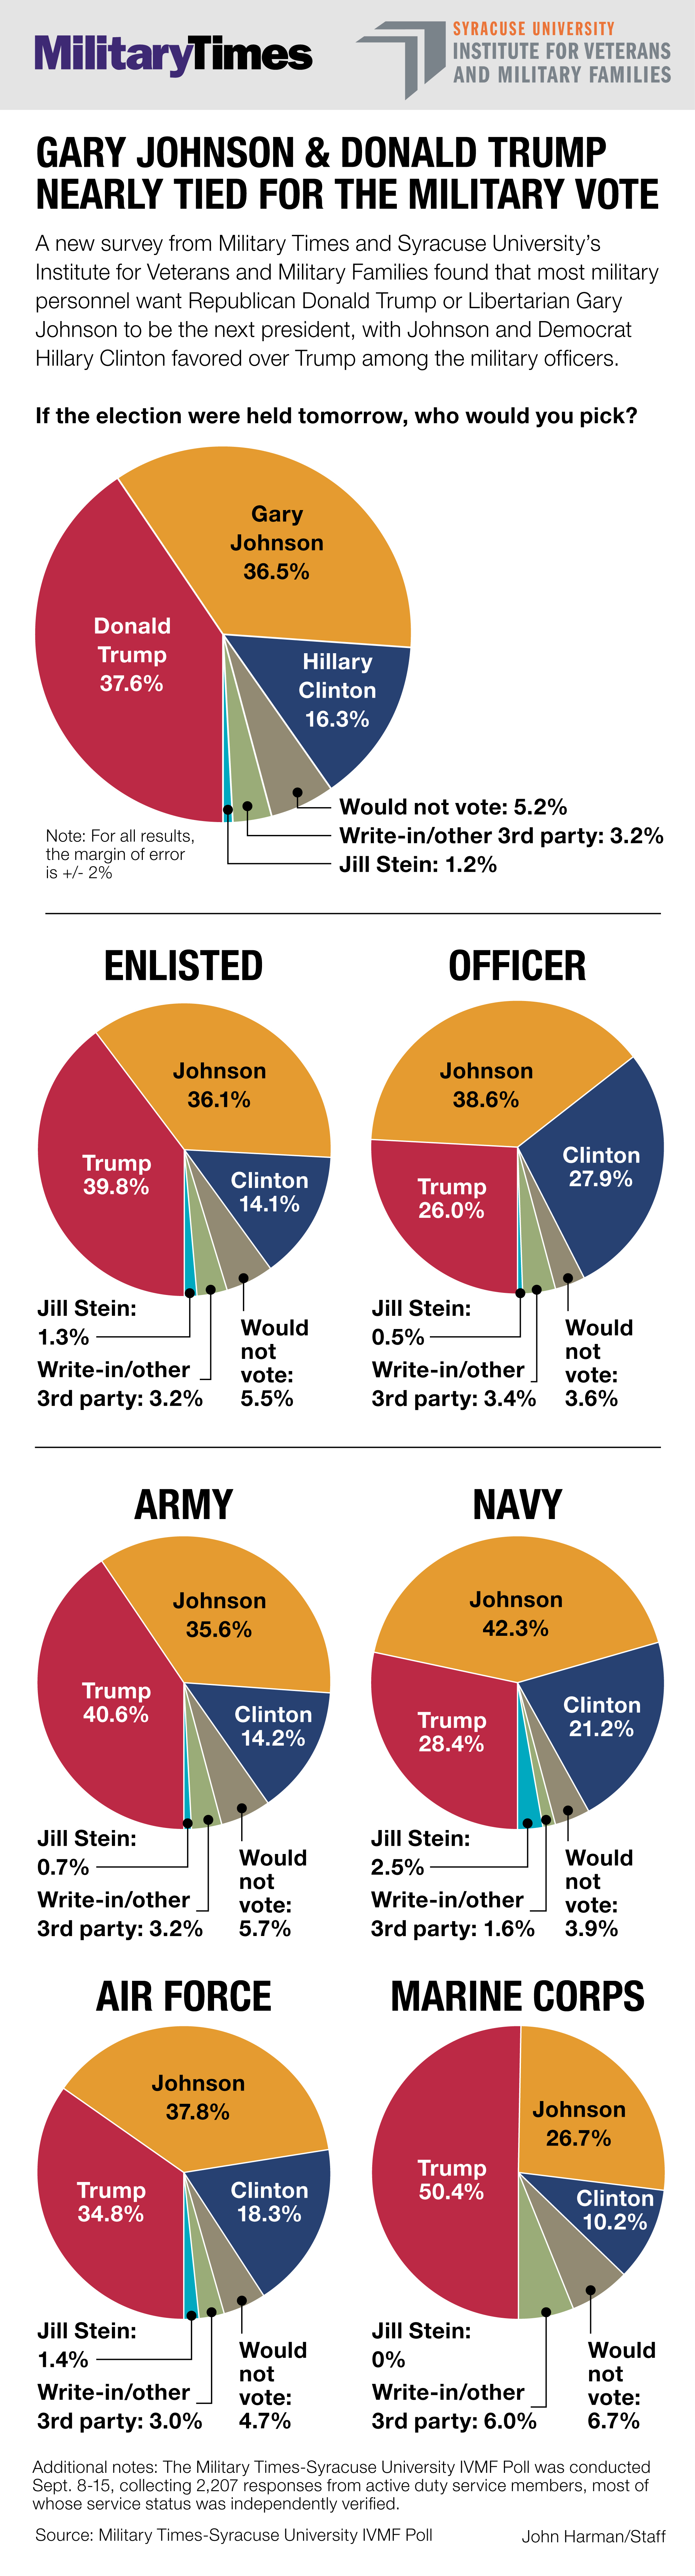 military-times-ivmf-poll-september-2016.jpg